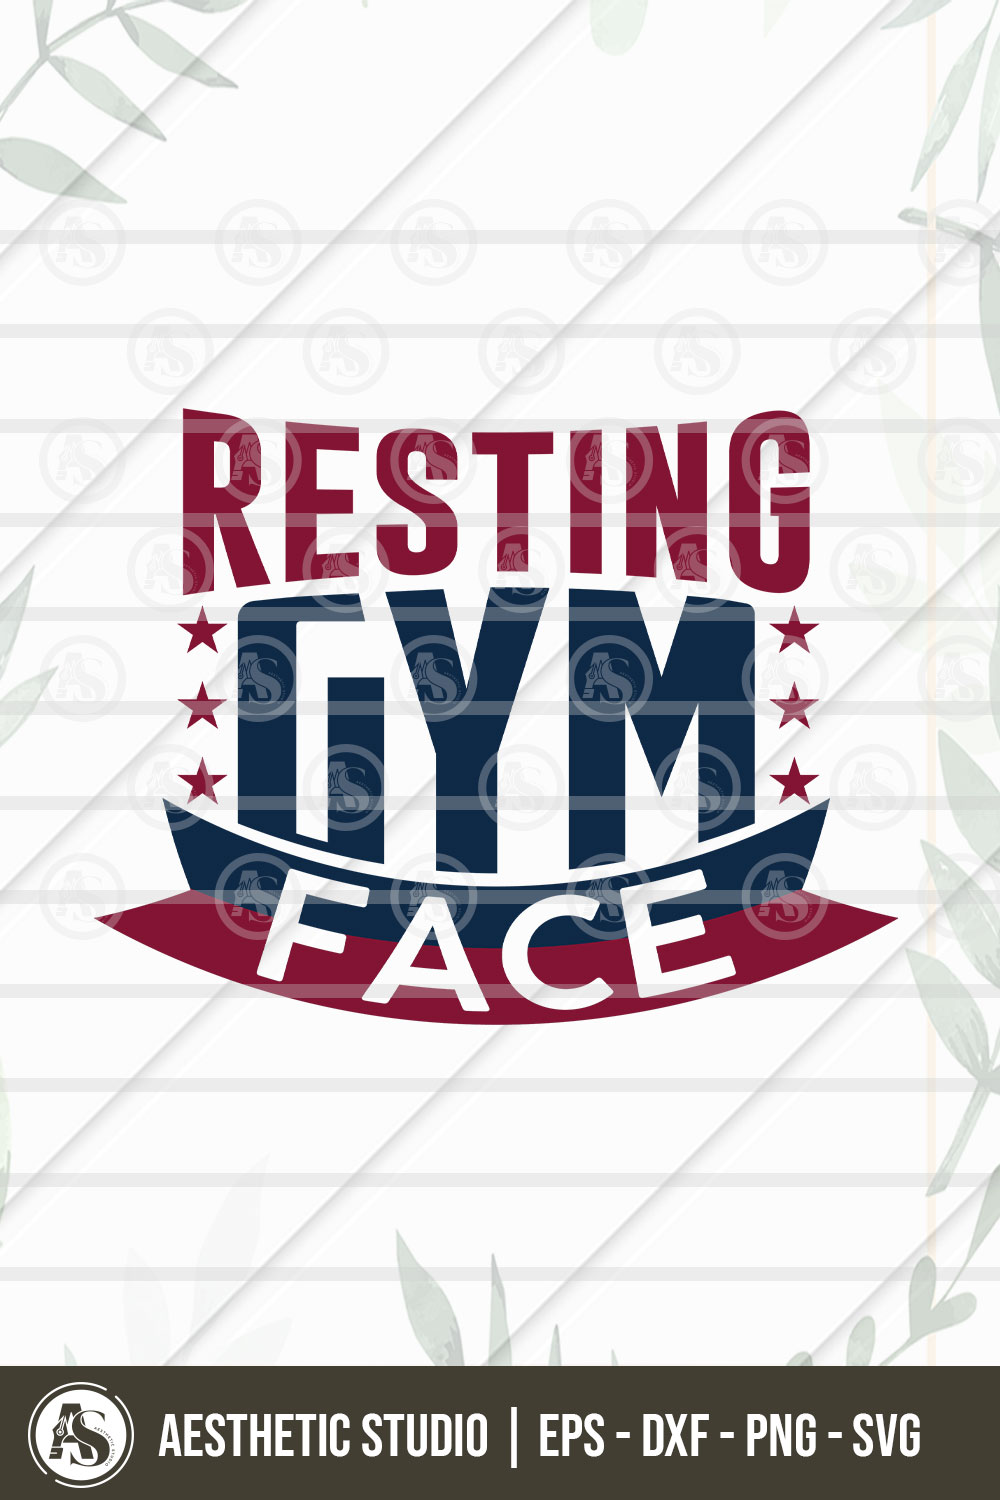 Gym Svg, Resting Gym Face Svg, Gym Cricut, Workout, Fitness, Gym Tshirt Svg, Gym Png Cut Files, Dxf, Svg, Eps pinterest preview image.